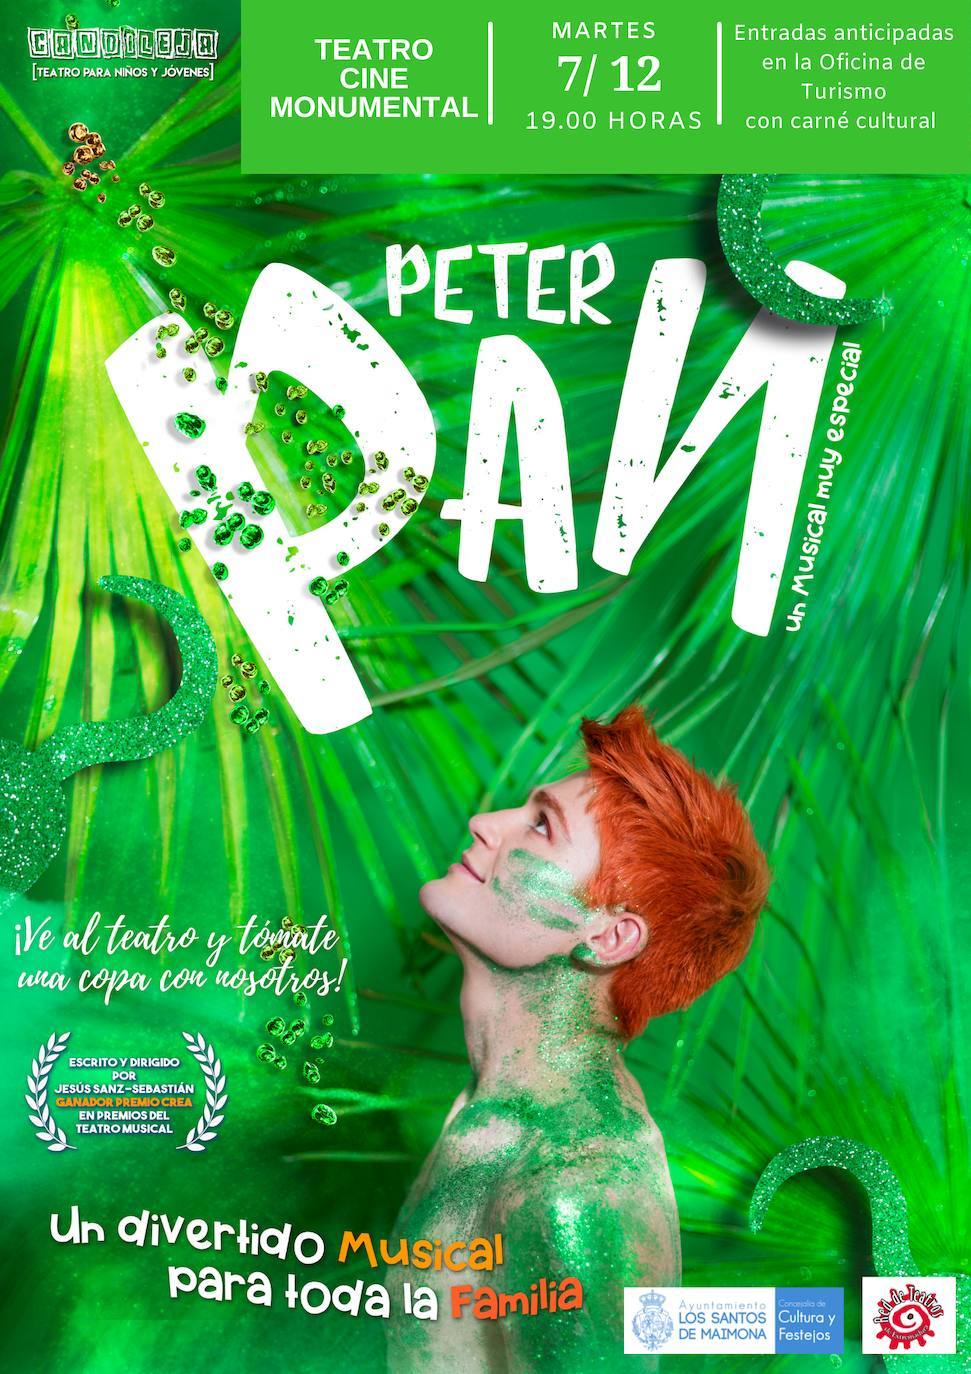 Hoy llega al Monumetal 'Peter Pan', un musical muy especial para toda la familia